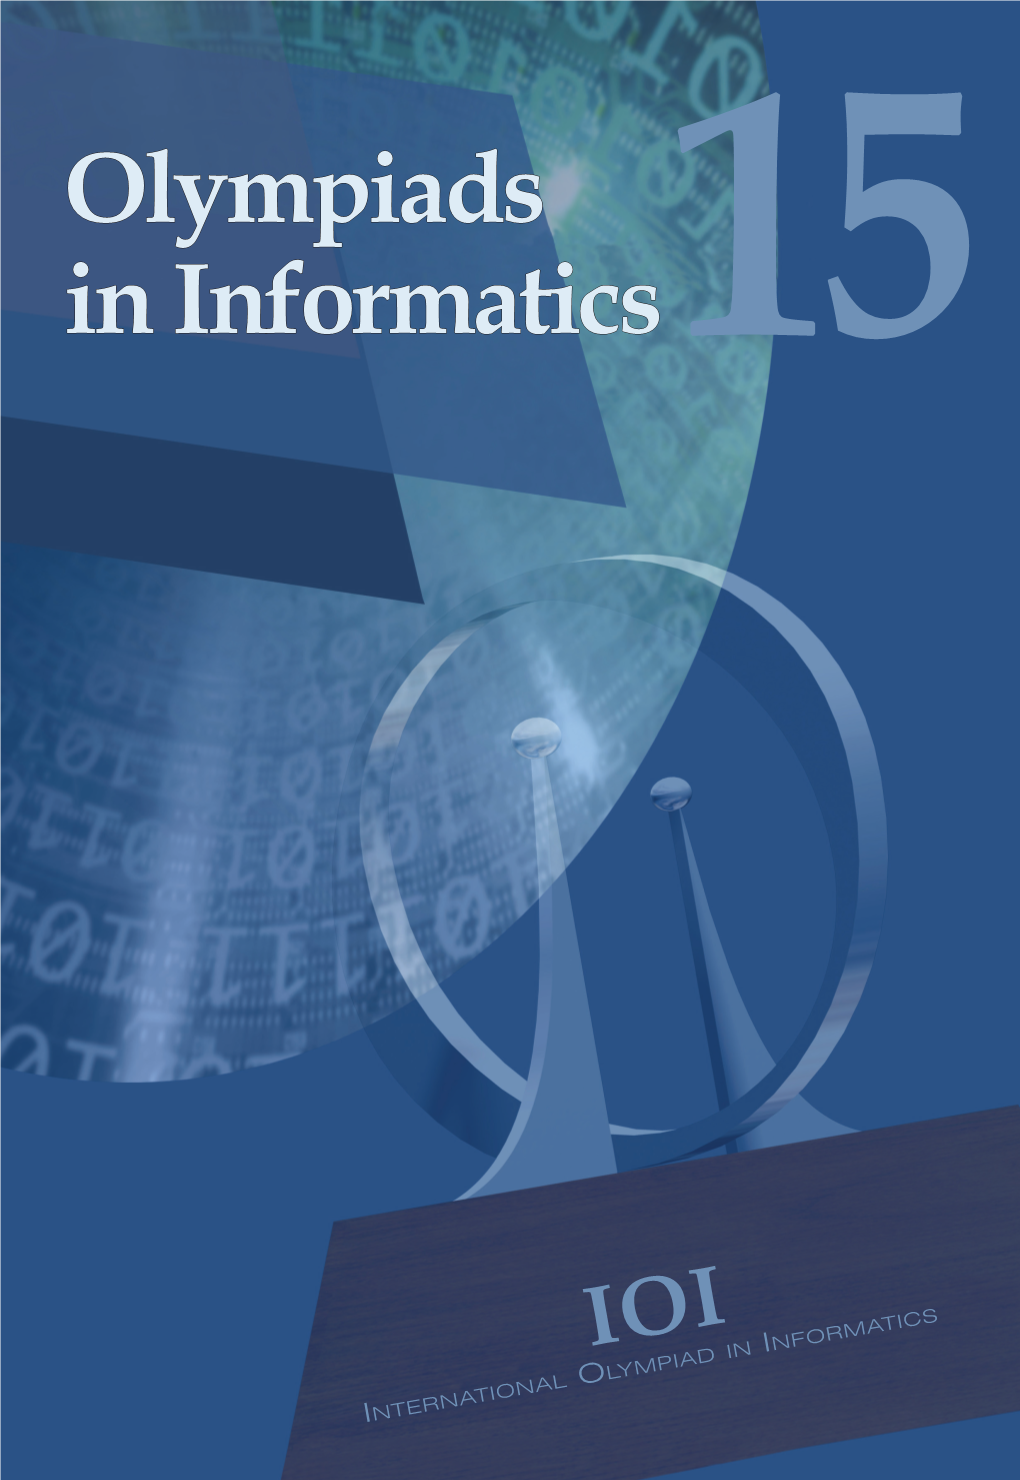 Olympiads in Informatics15